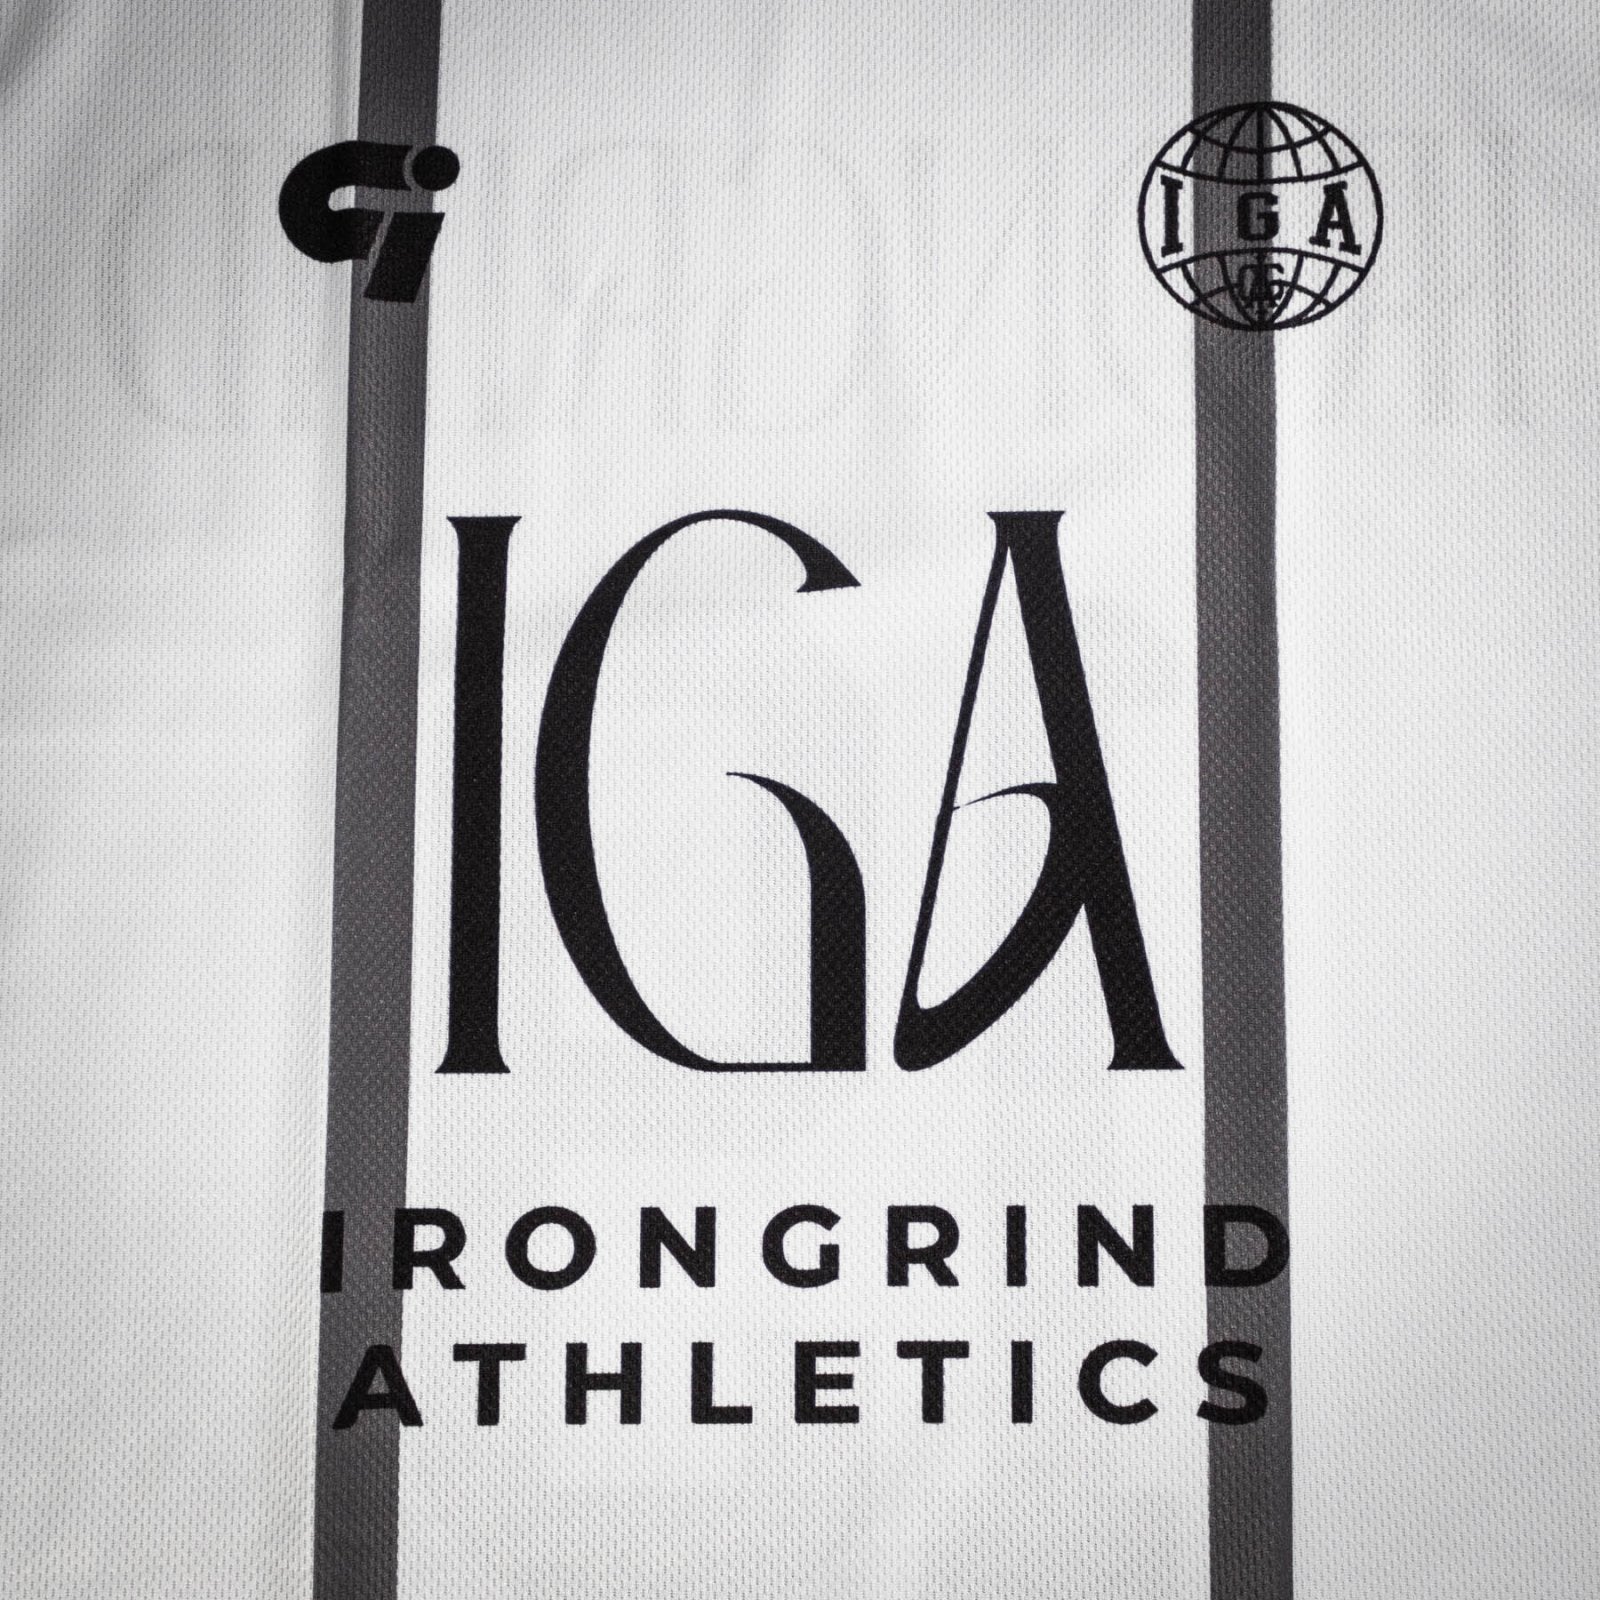 Prevail Soccer Jersey WHITE - IronGrind Athletics - activewear - gymshark - alphalete